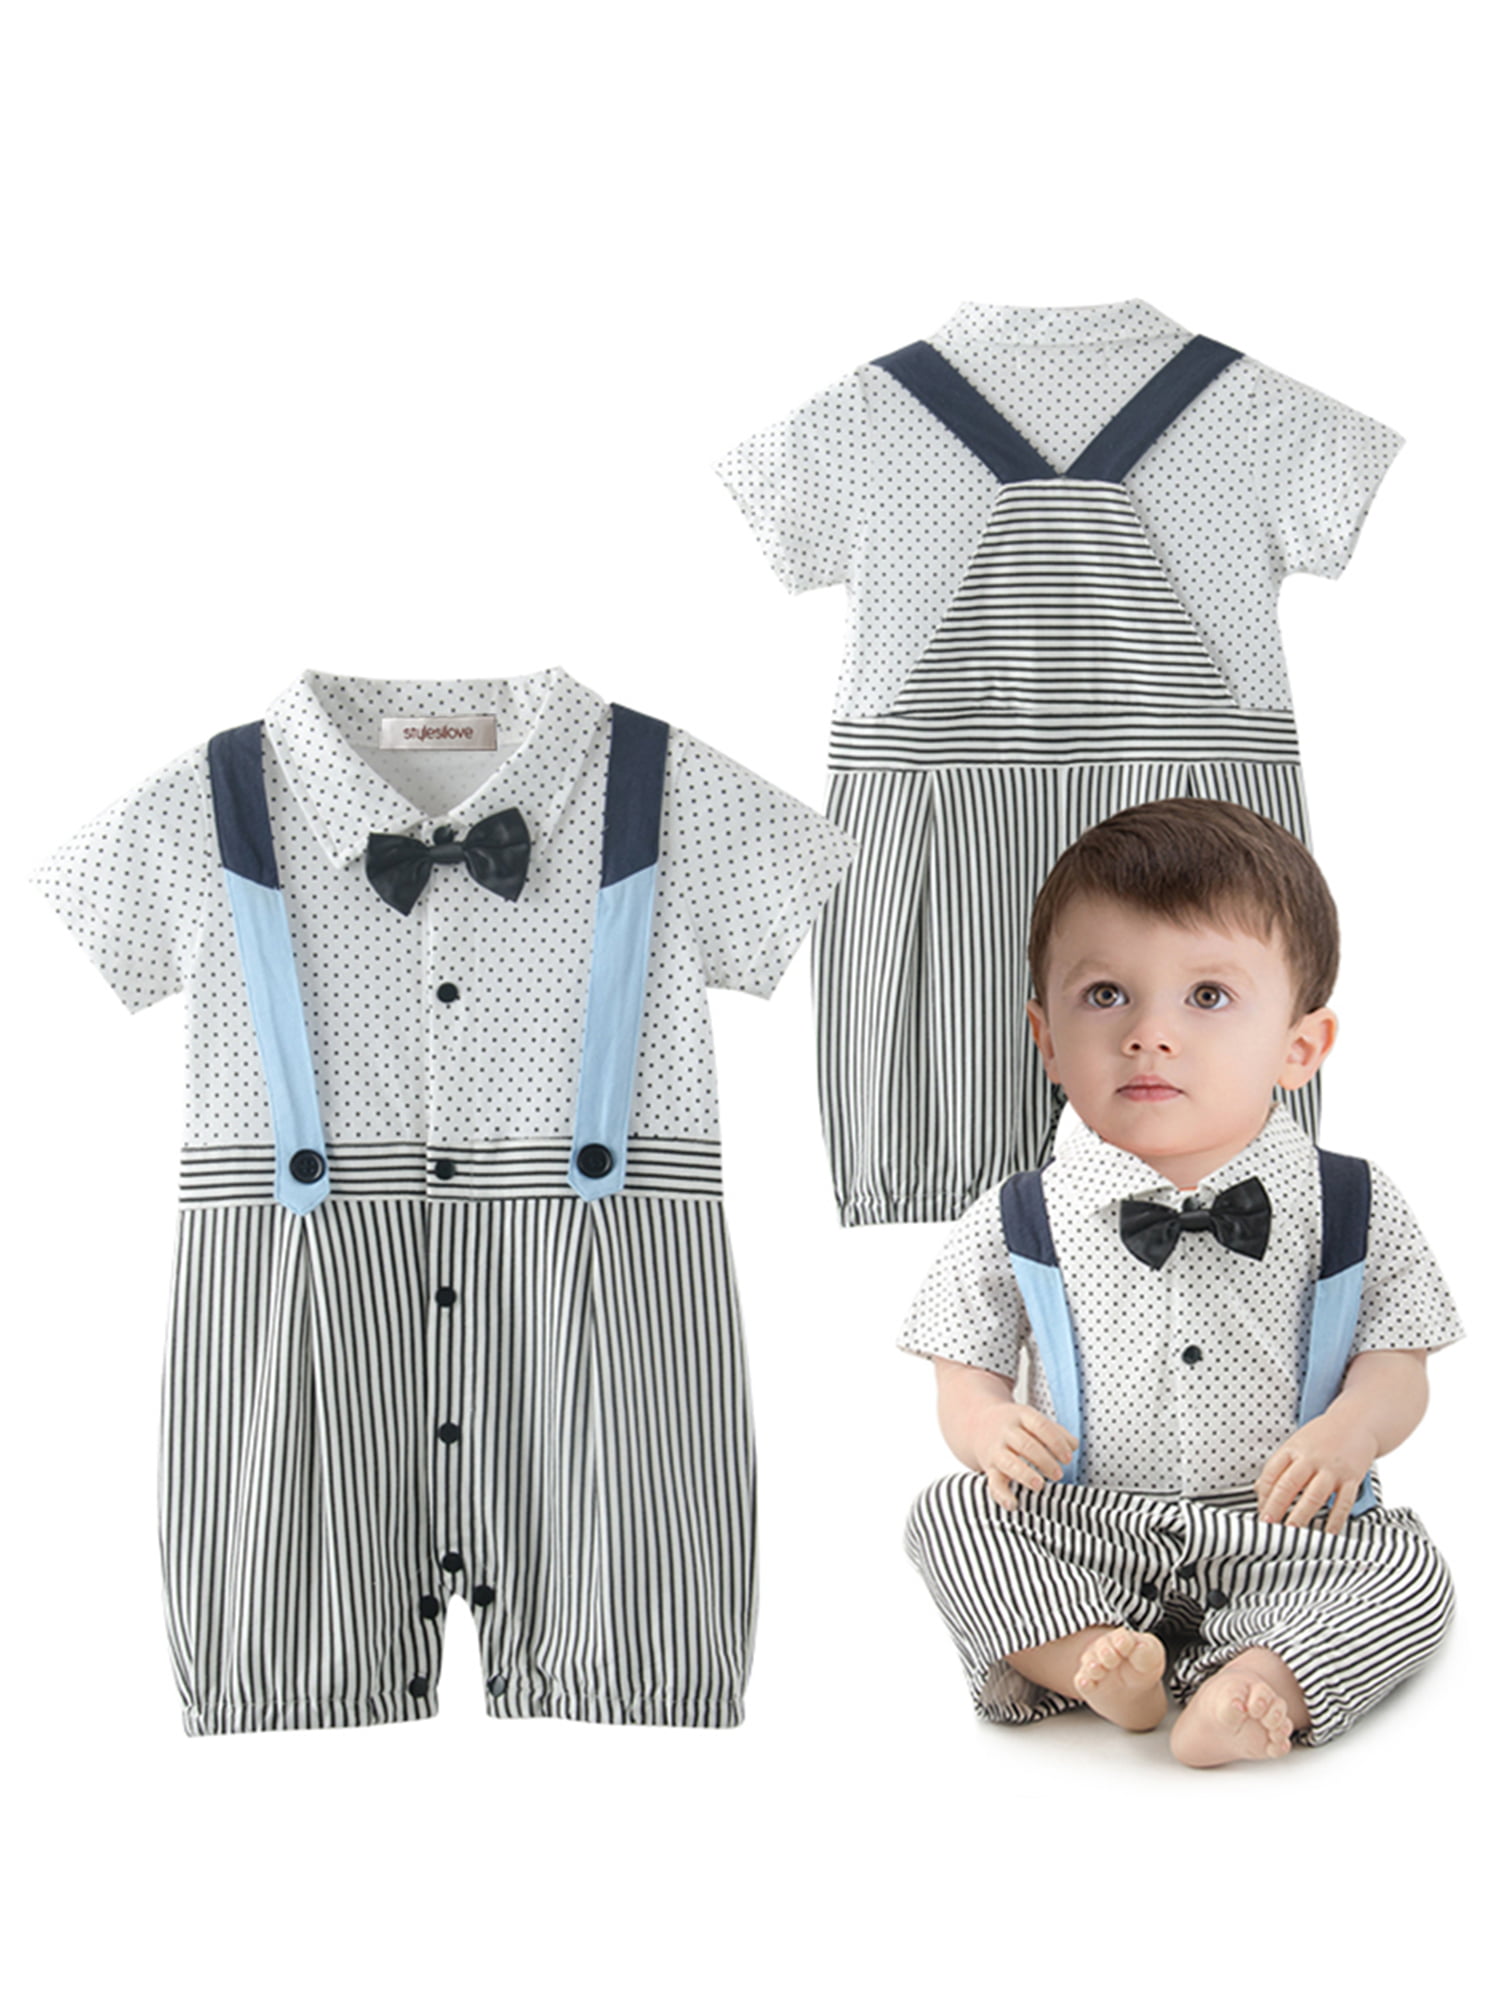 6 month baby boy party wear dress